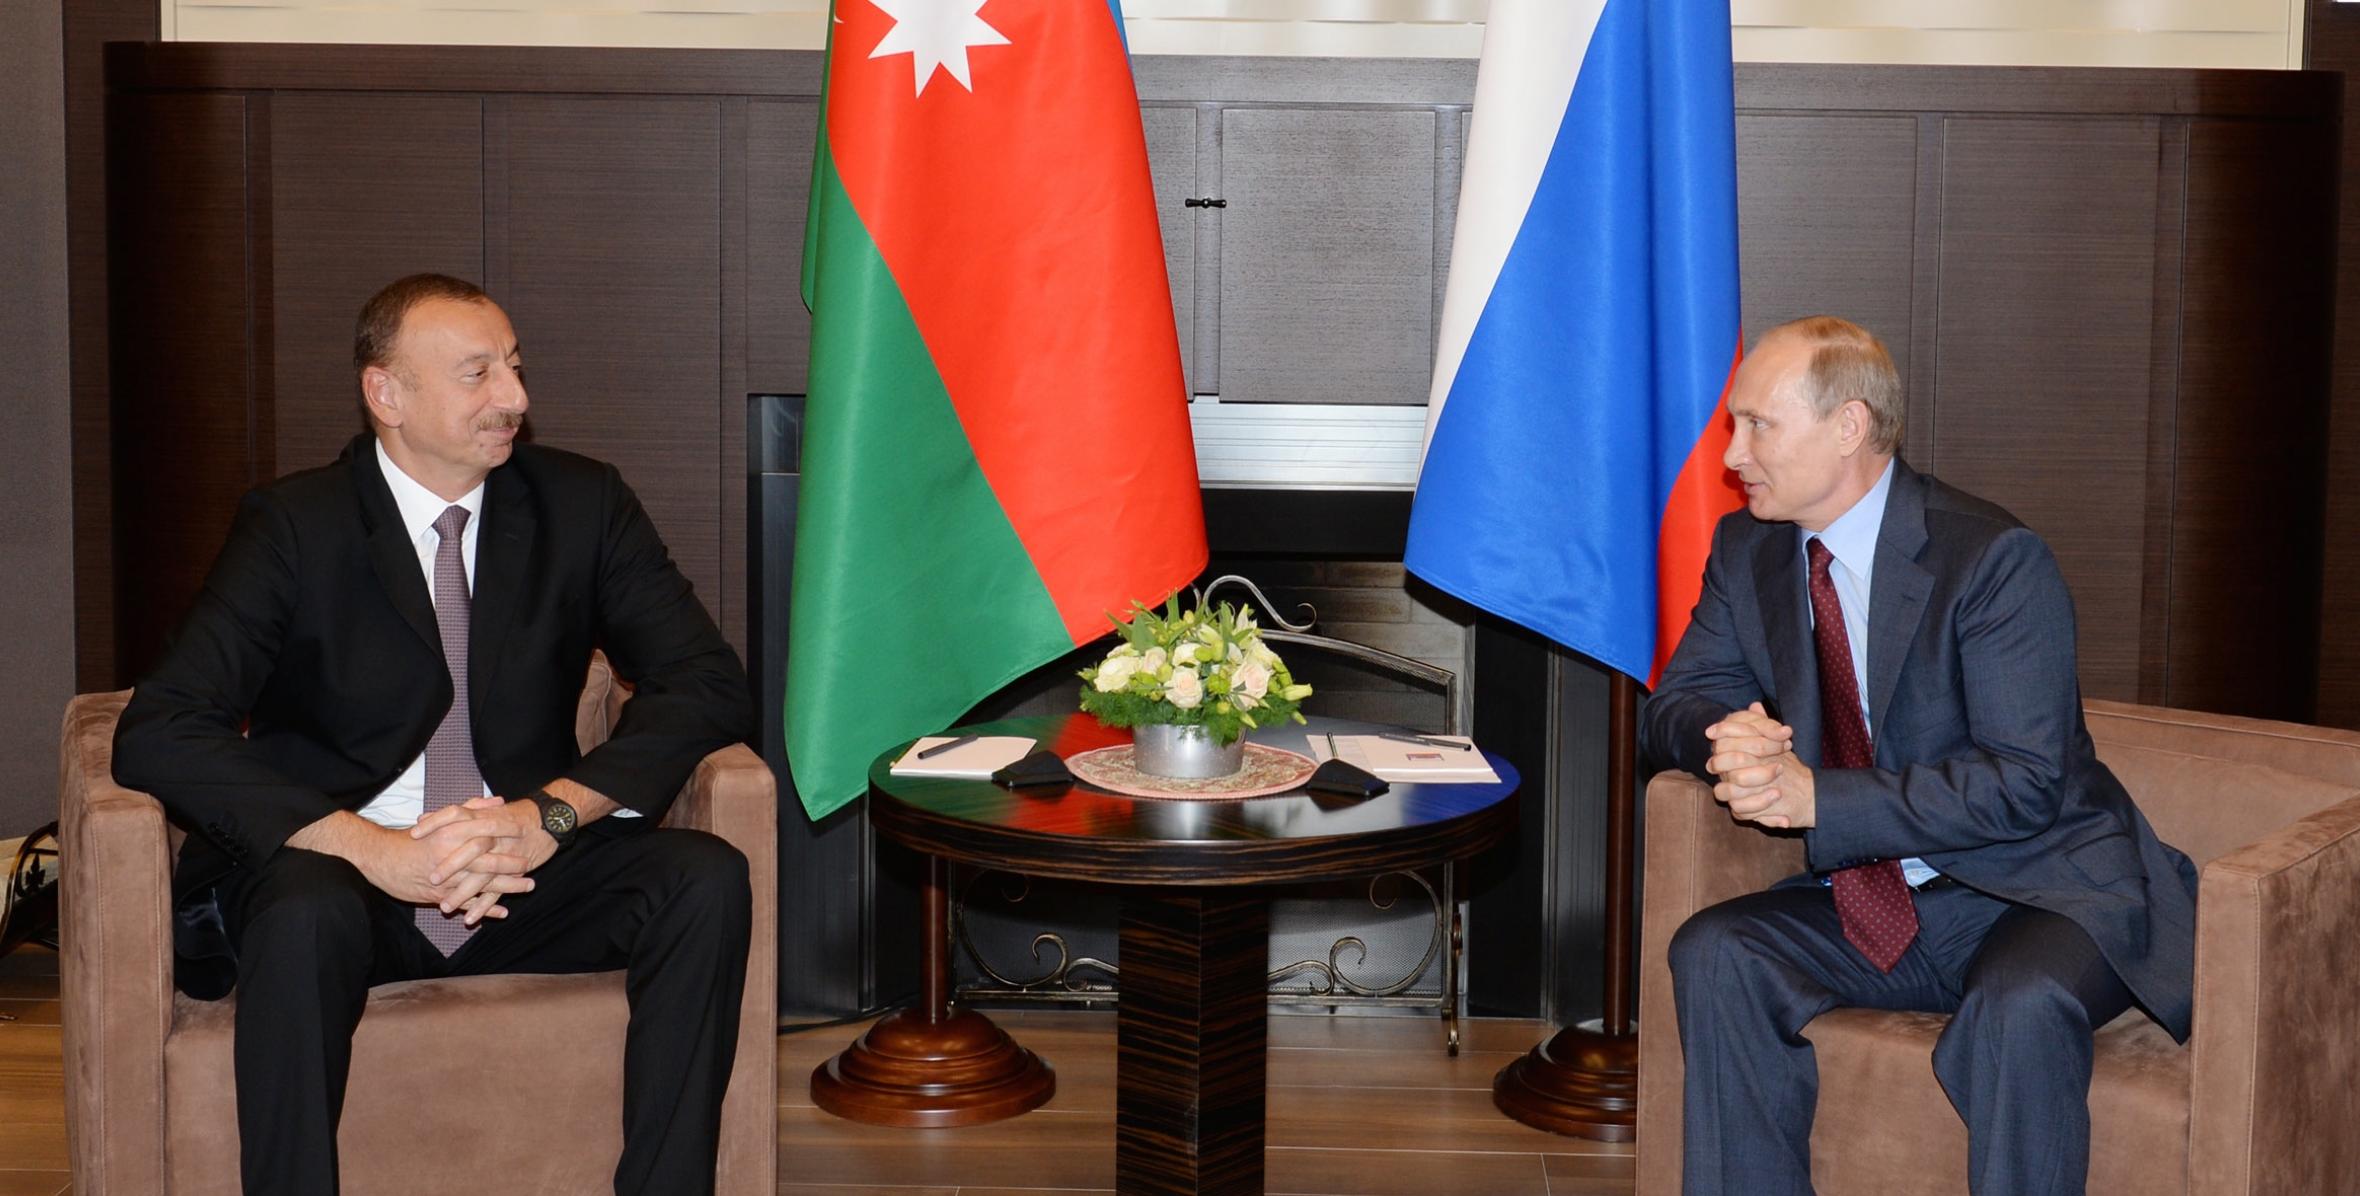 Ilham Aliyev met with Russian President Vladimir Putin in Sochi